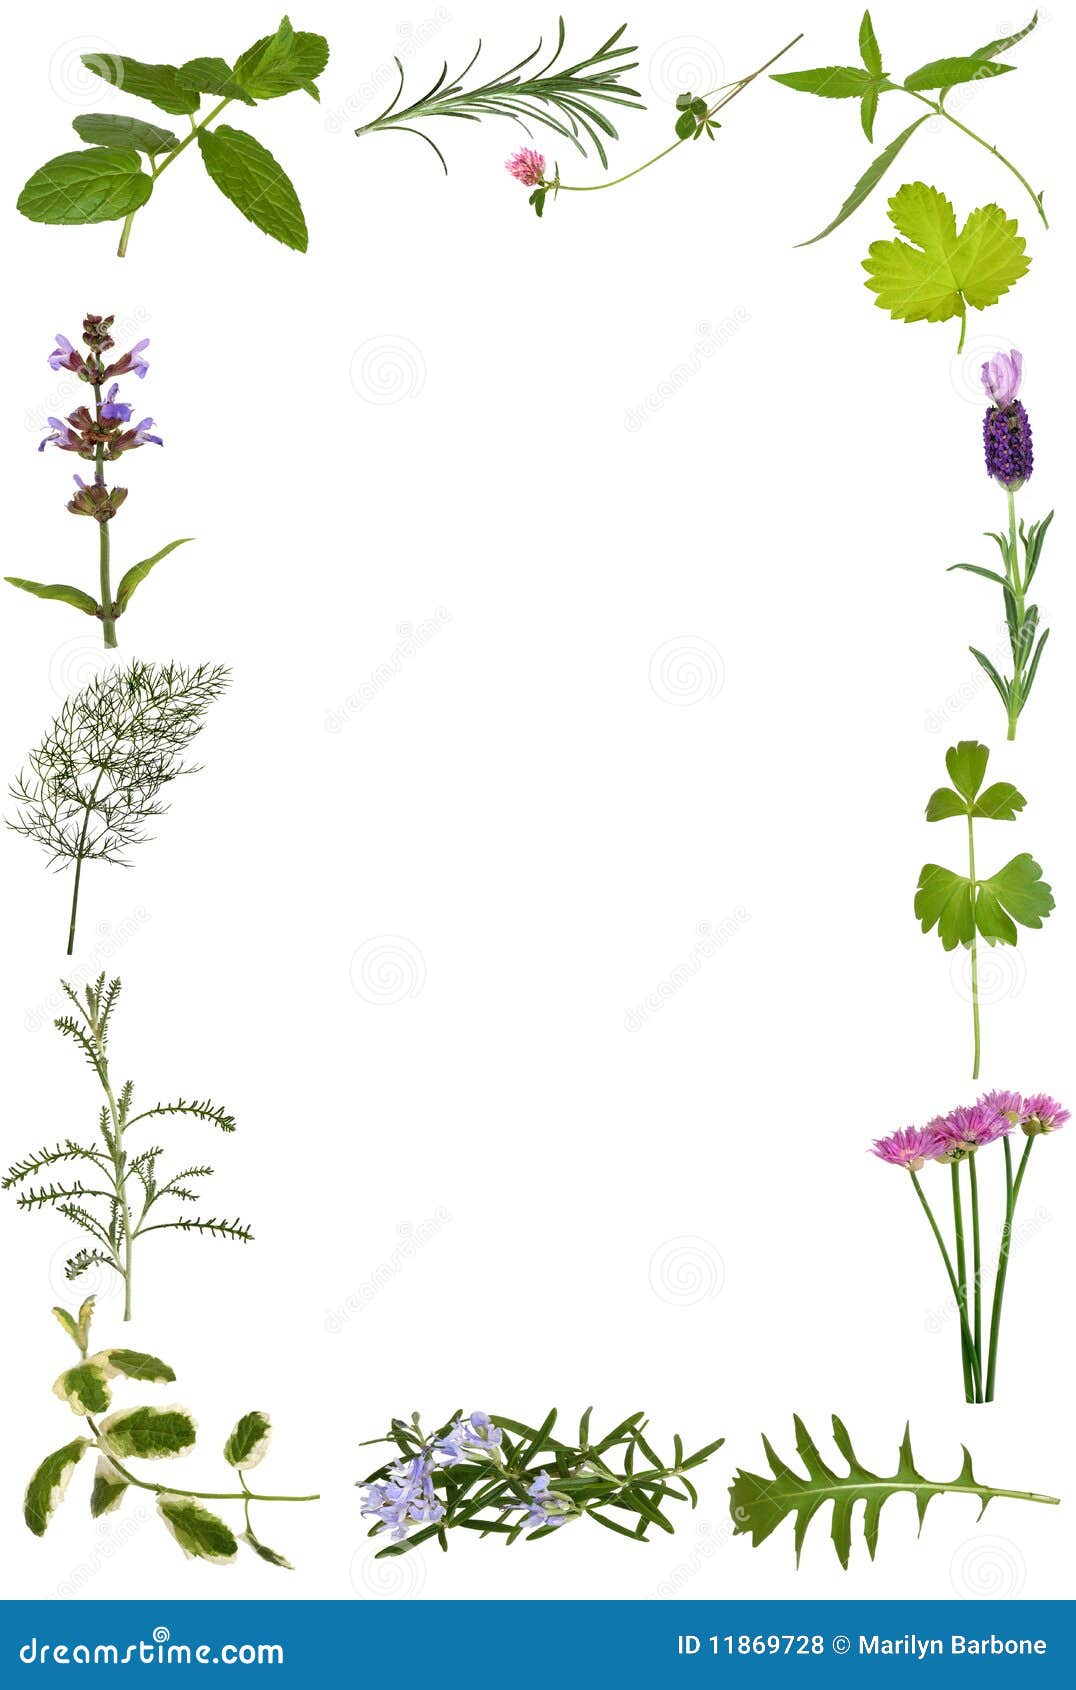 herb flower and leaf border